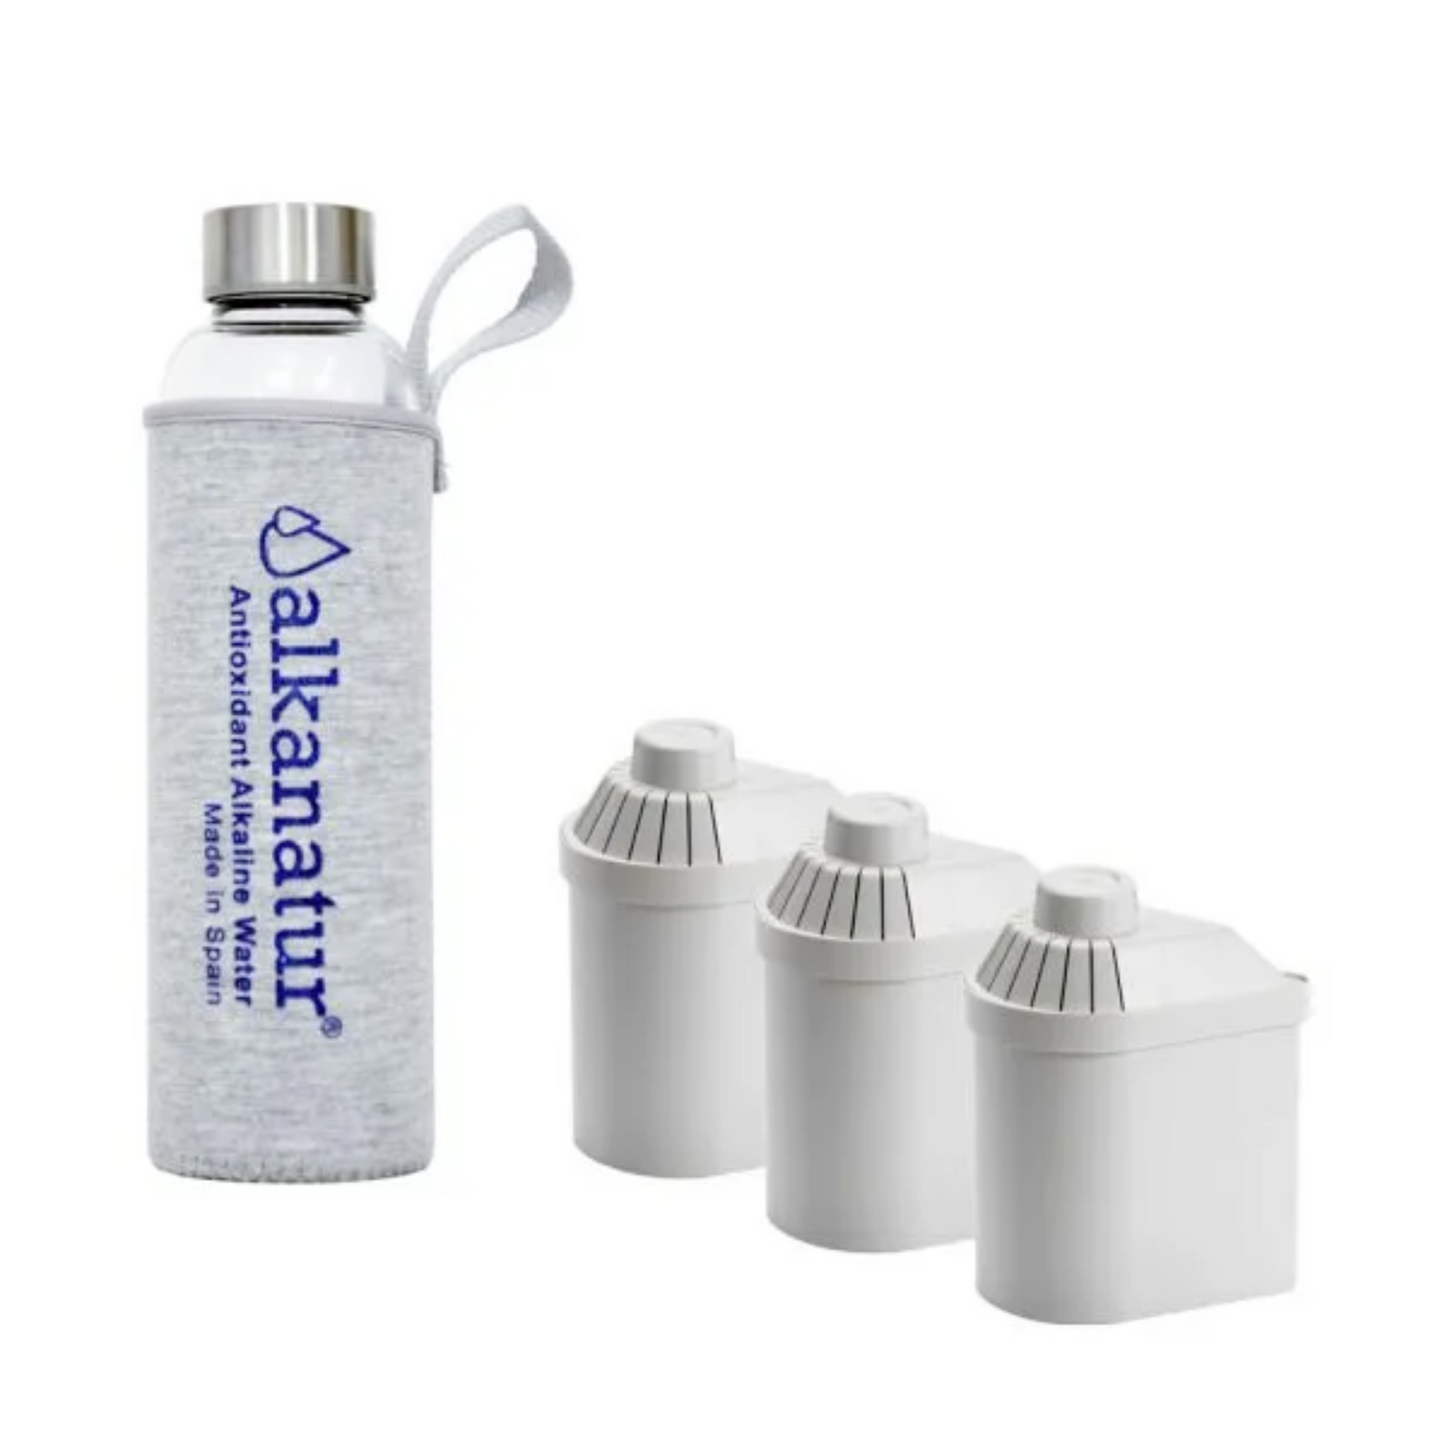 Pack Filtros Alkanatur Drops (duración 1200 litros) + Botella de cristal borosilicato